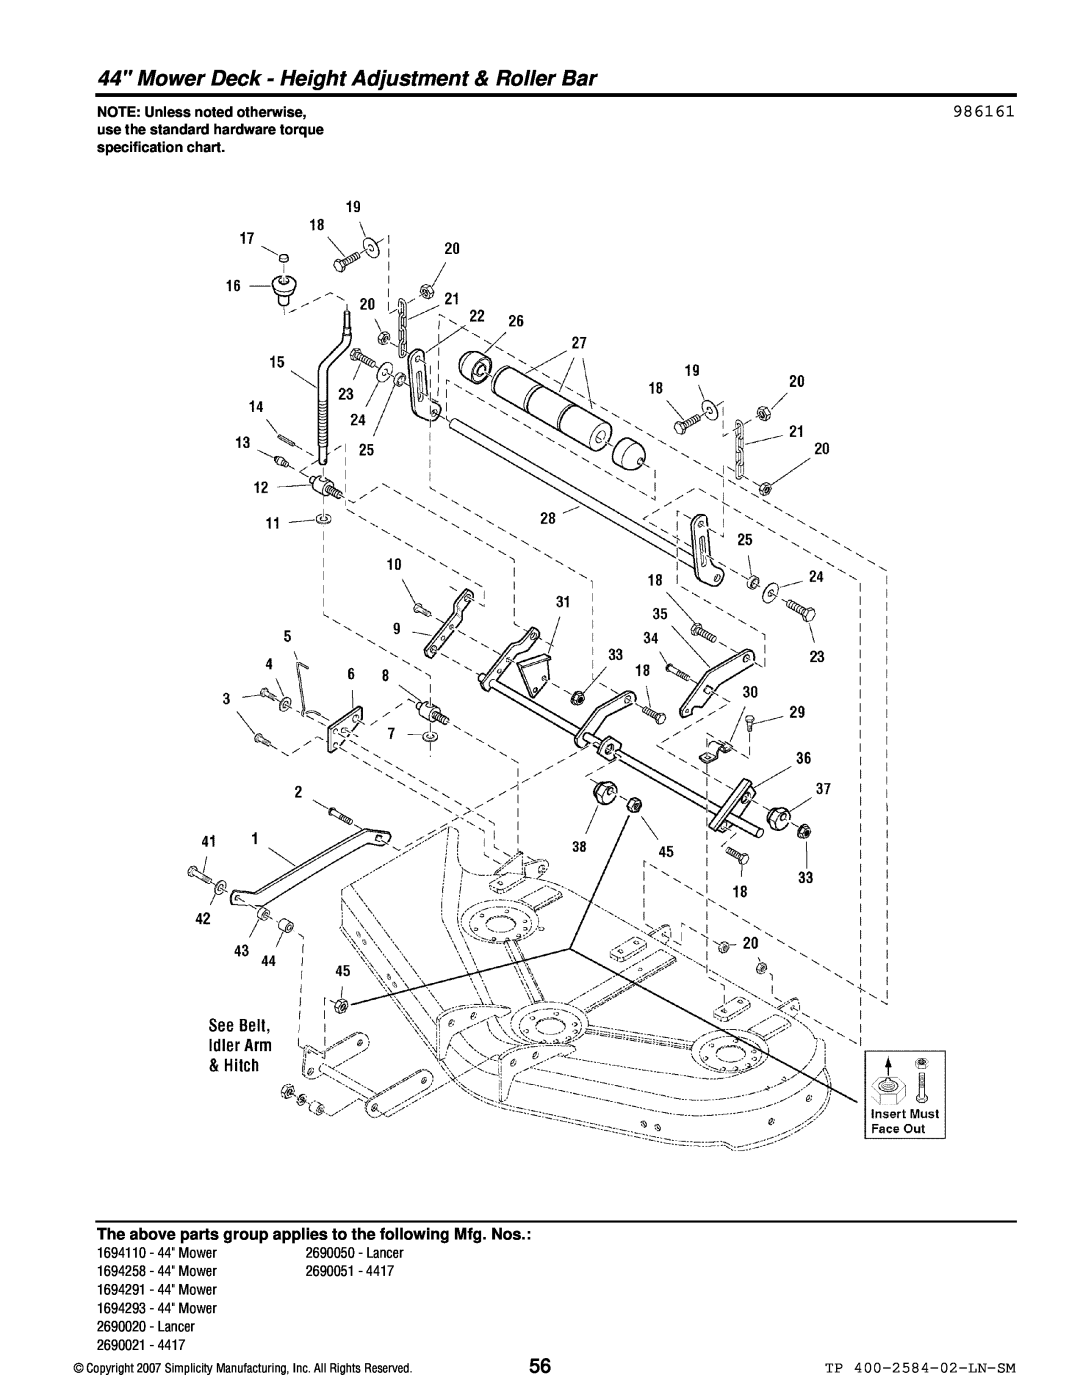 Simplicity Lancer / 4400 manual Mower Deck - Height Adjustment & Roller Bar, 986161, TP 400-2584-02-LN-SM, 1694110, 1694258 